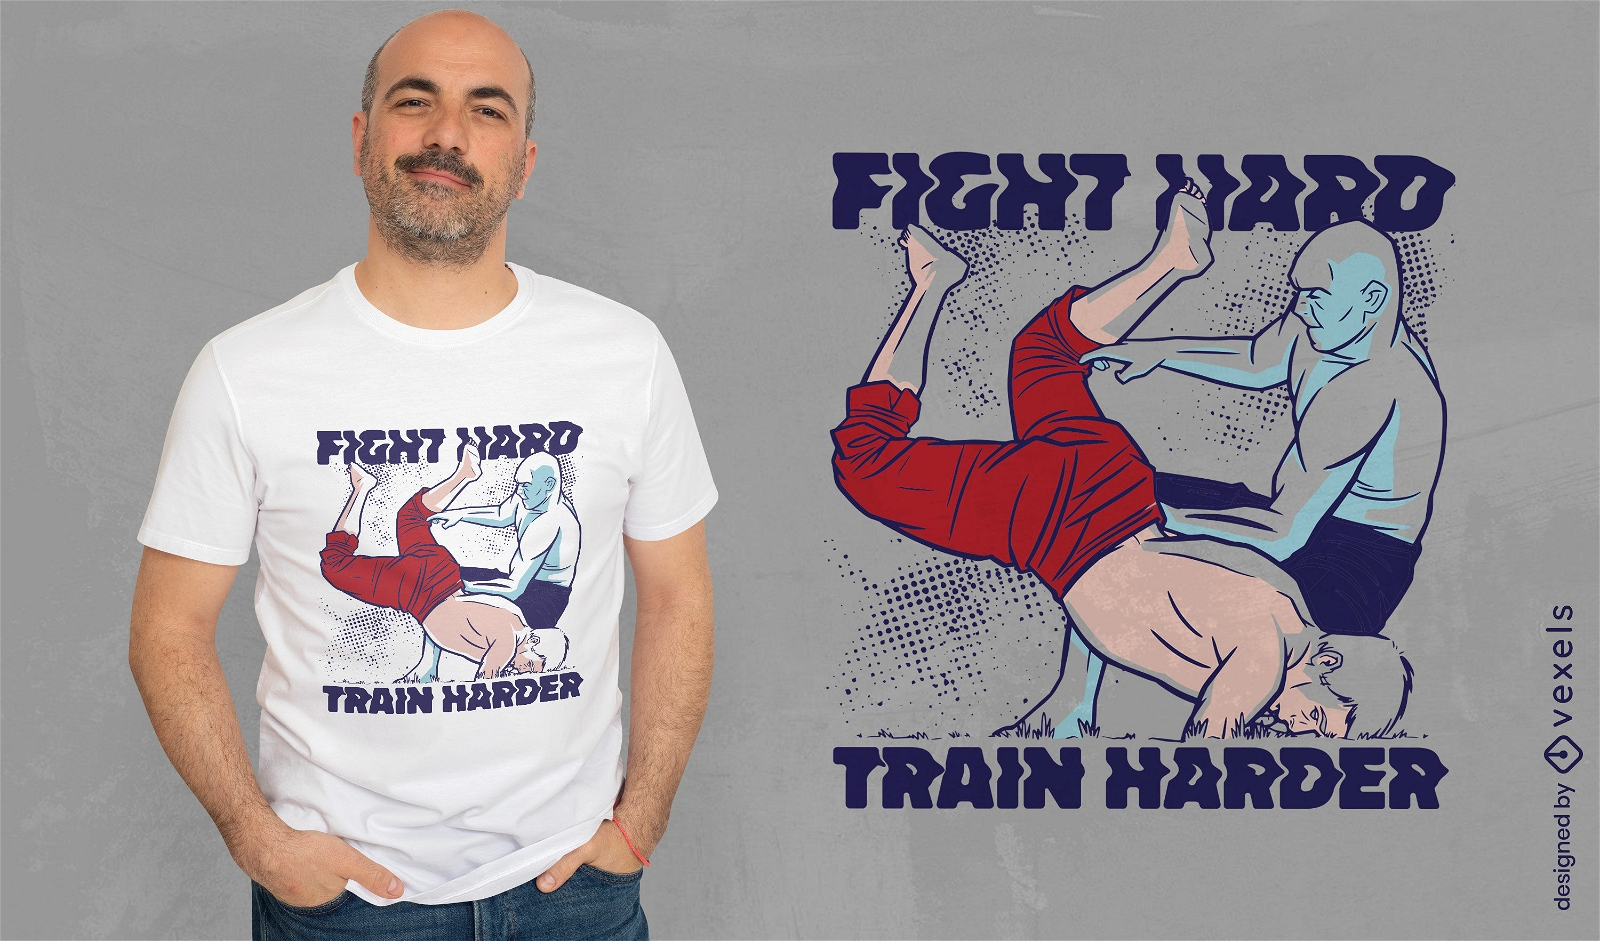 Fight hard t-shirt design